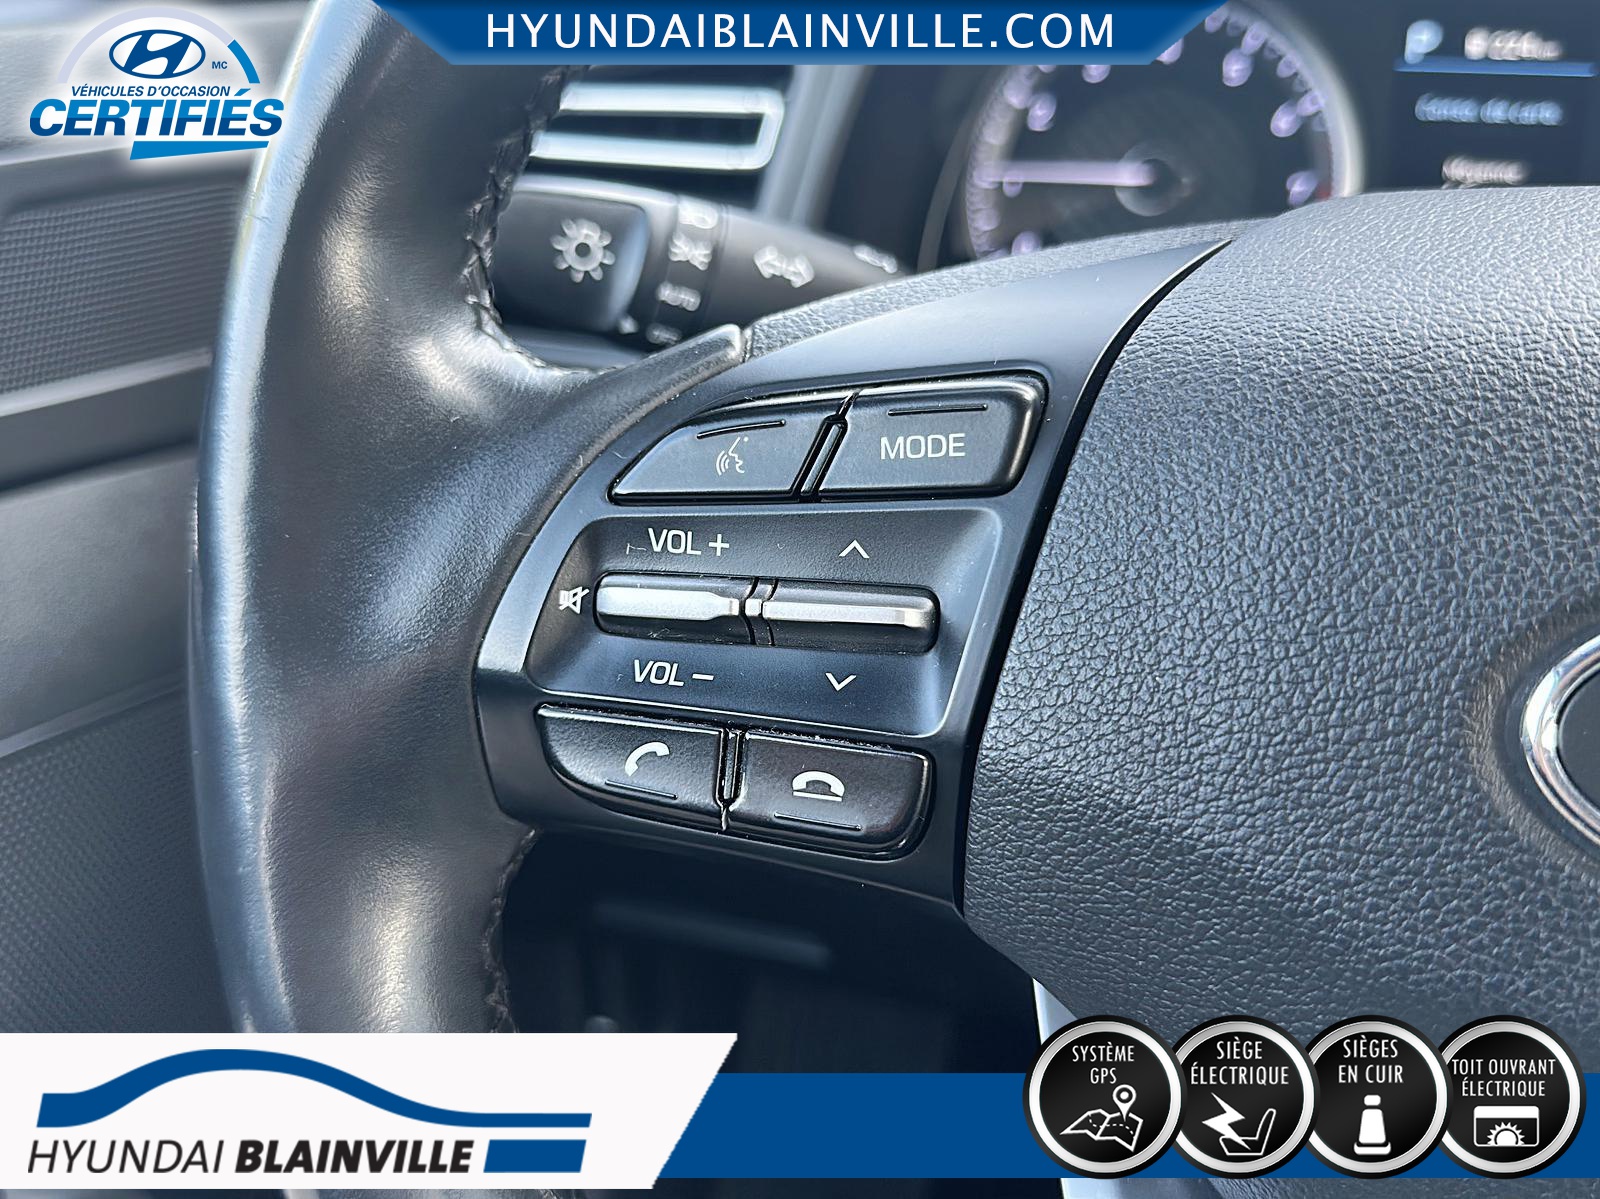 2020 Hyundai Elantra ULTIMATE, CUIR. TOIT OUVRANT, GPS+ Main Image